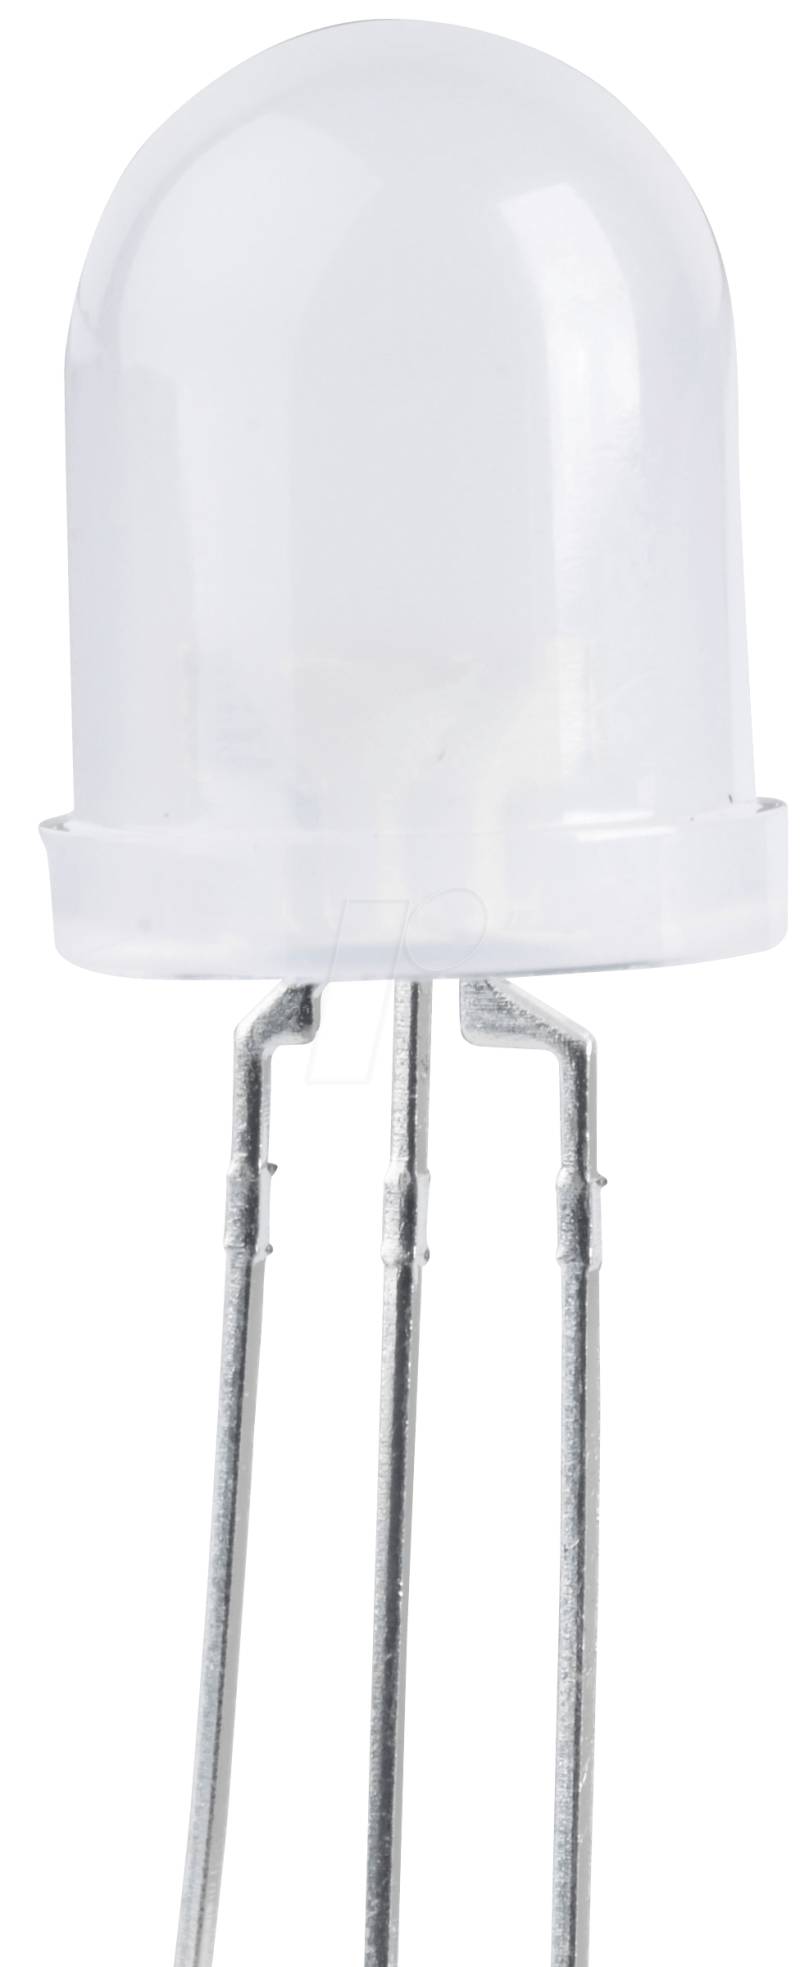 LED 10 RG-3 - Duo-LED, 10 mm, bedrahtet, 3-Pin, rt/gn, 90 mcd, 50° von Kingbright